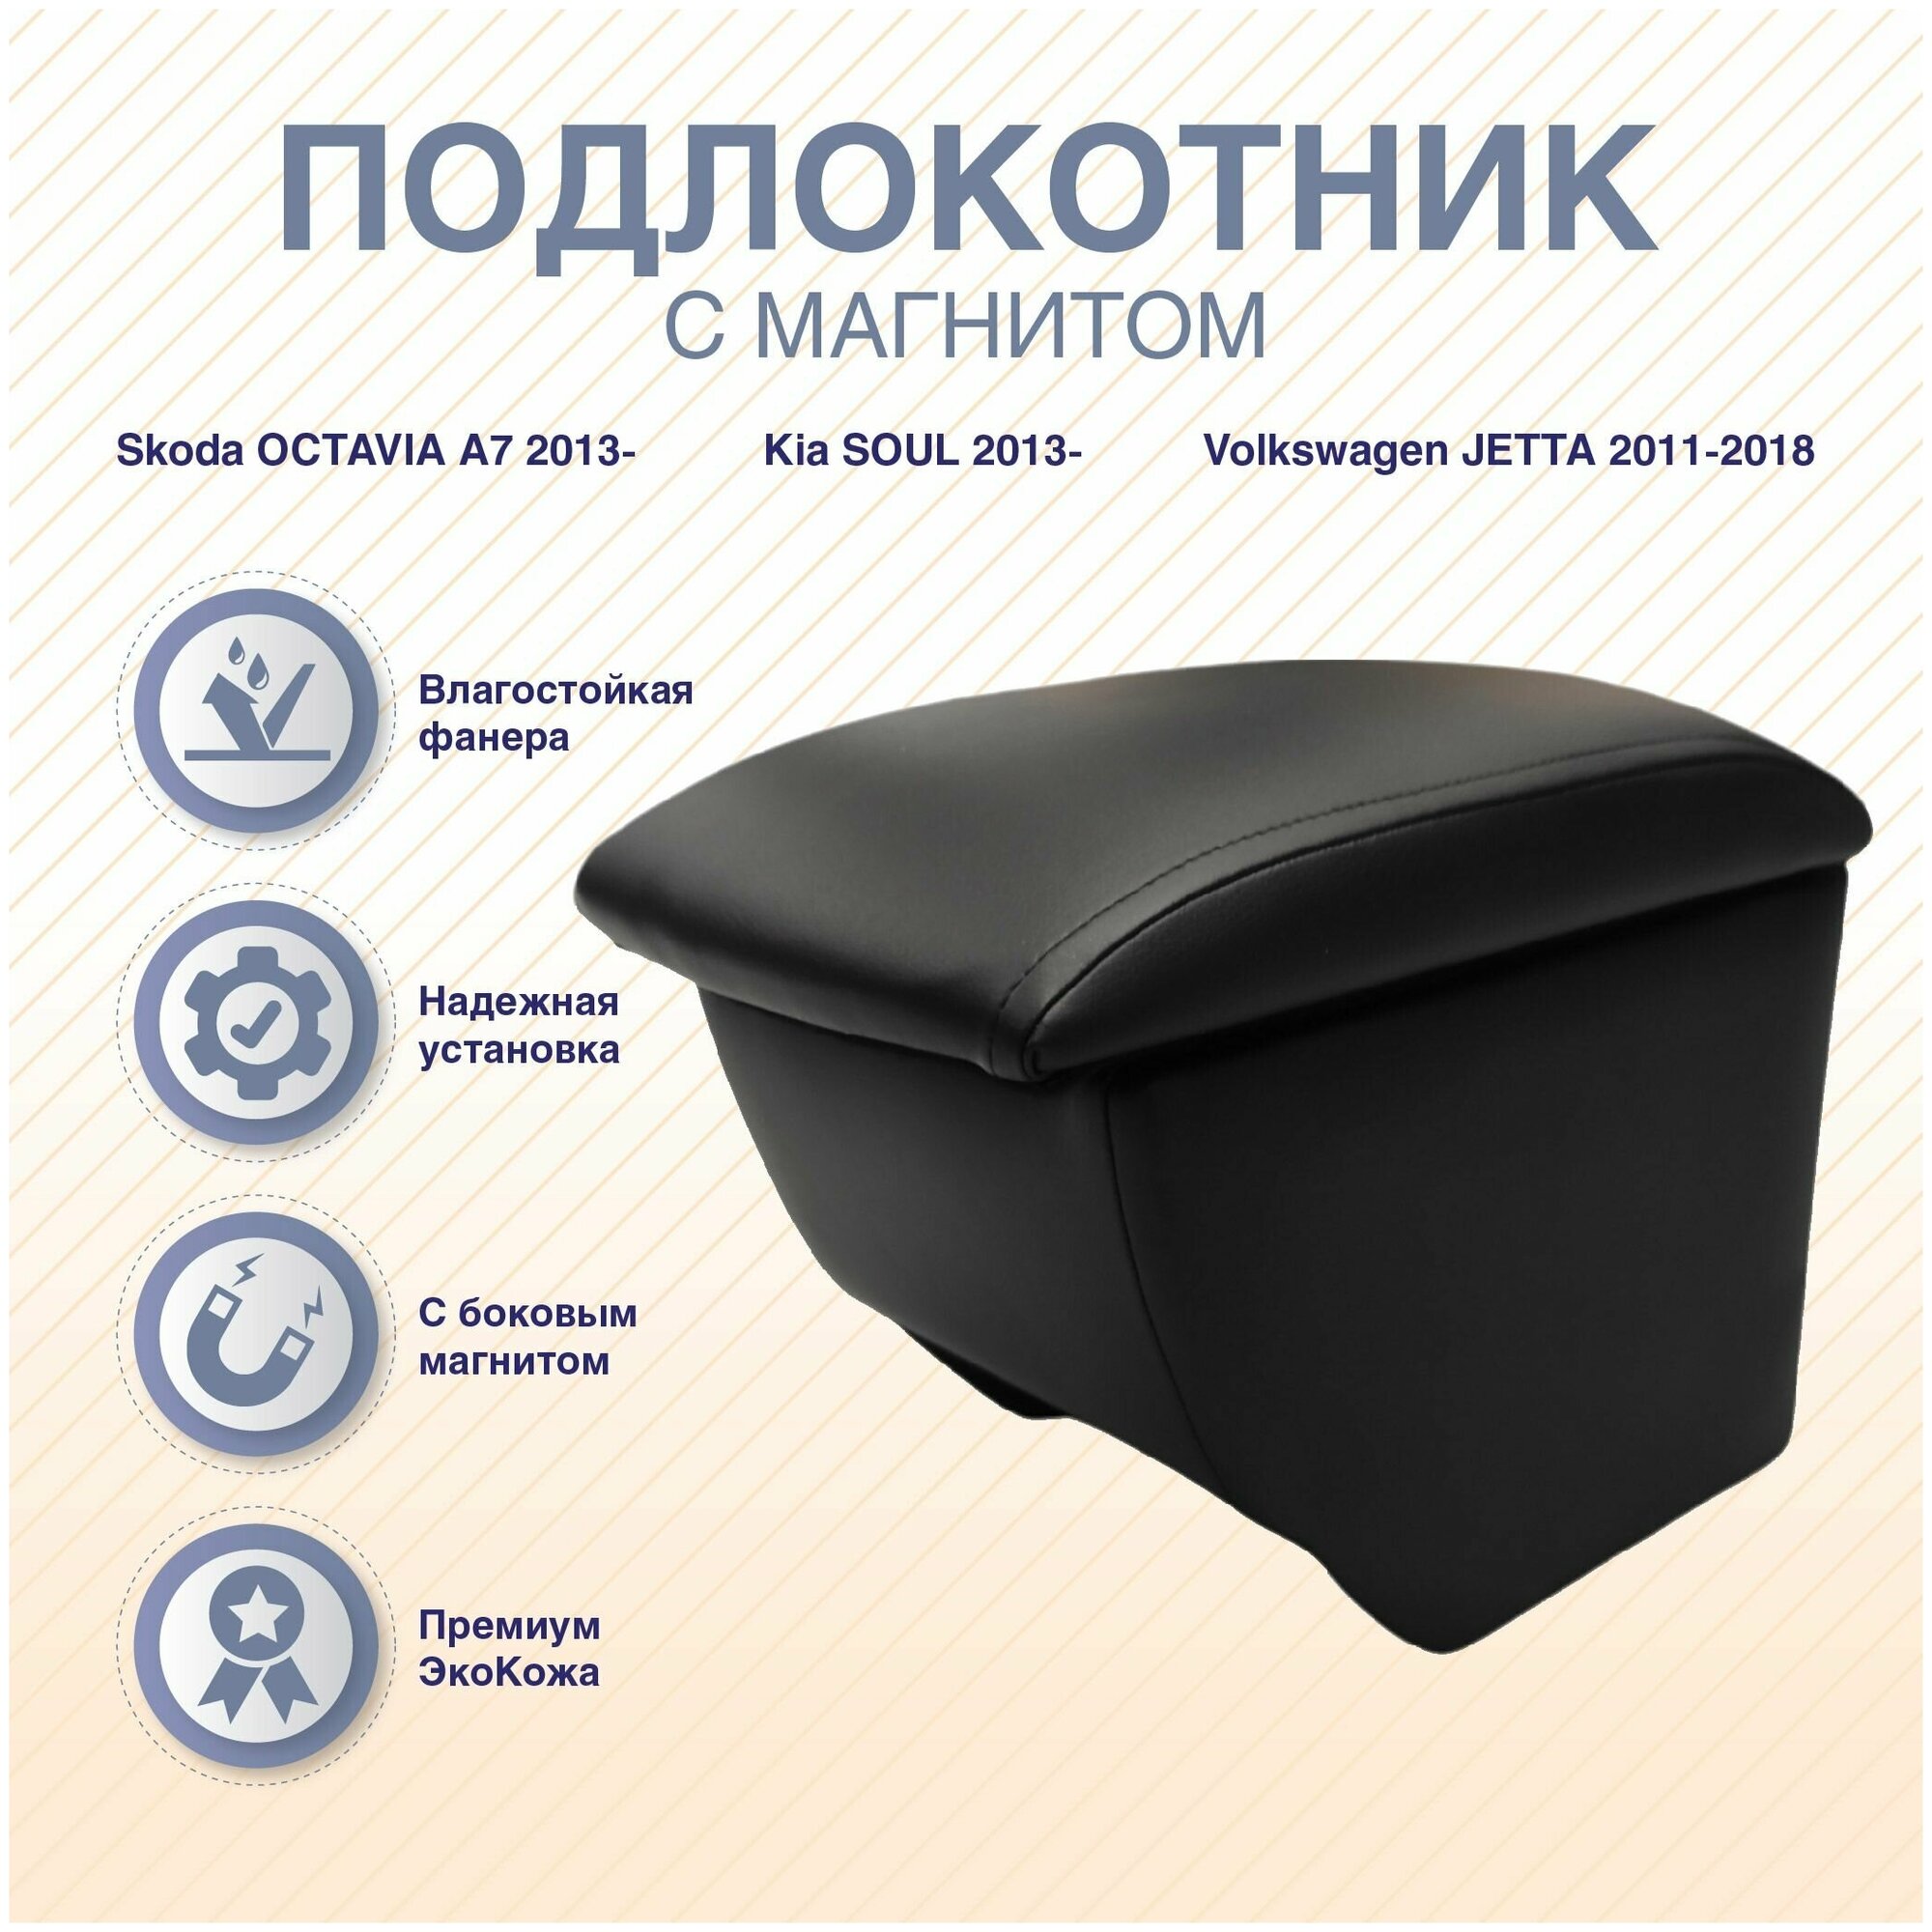 Подлокотник-бар с магнитом Skoda Octavia A7 (2013-) / Kia Soul (2013-) / Volkswagen JETTA (2011-2018)